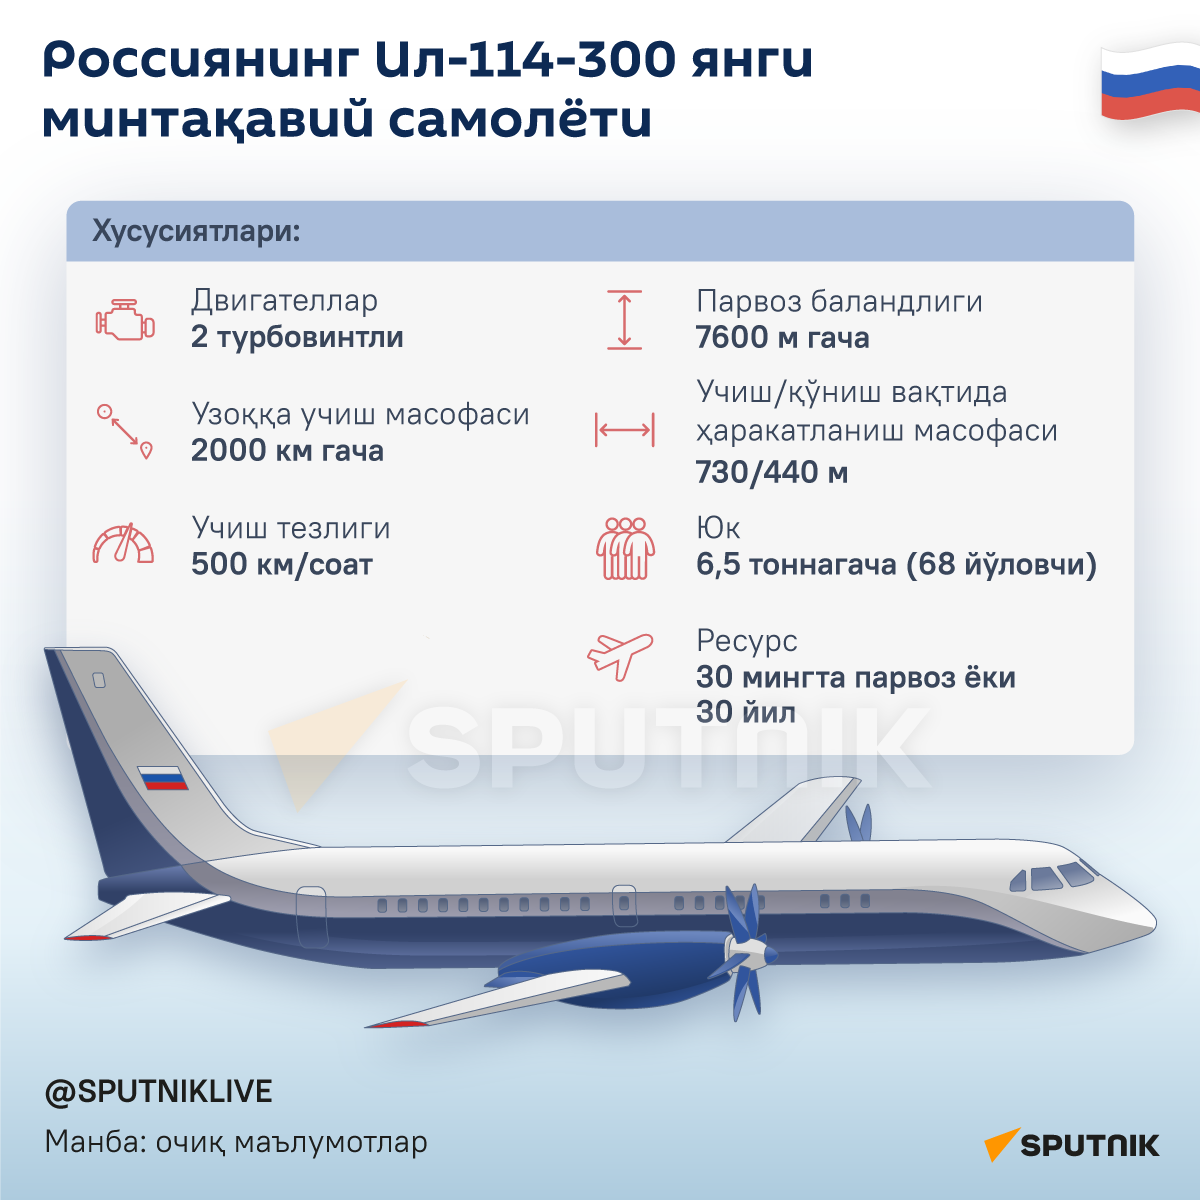 Yangi Il-114-300 - Sputnik O‘zbekiston